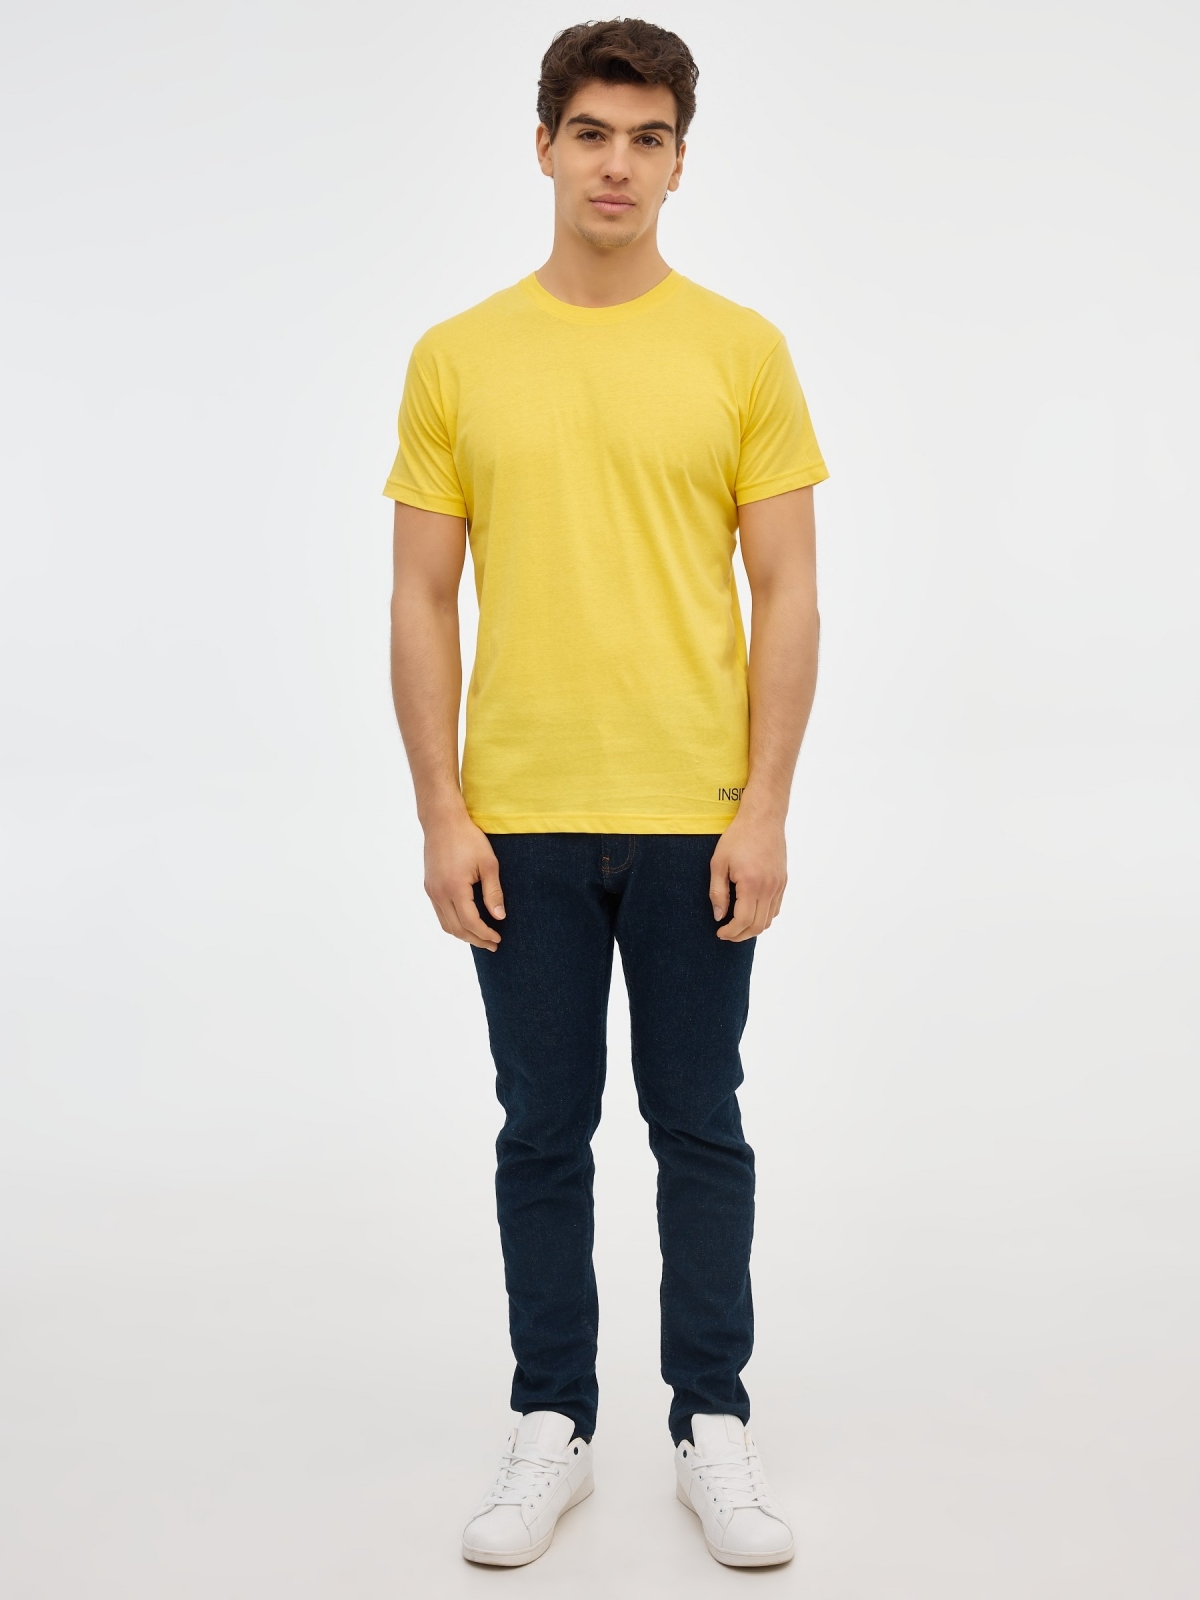 Camiseta básica manga corta amarillo vista general frontal